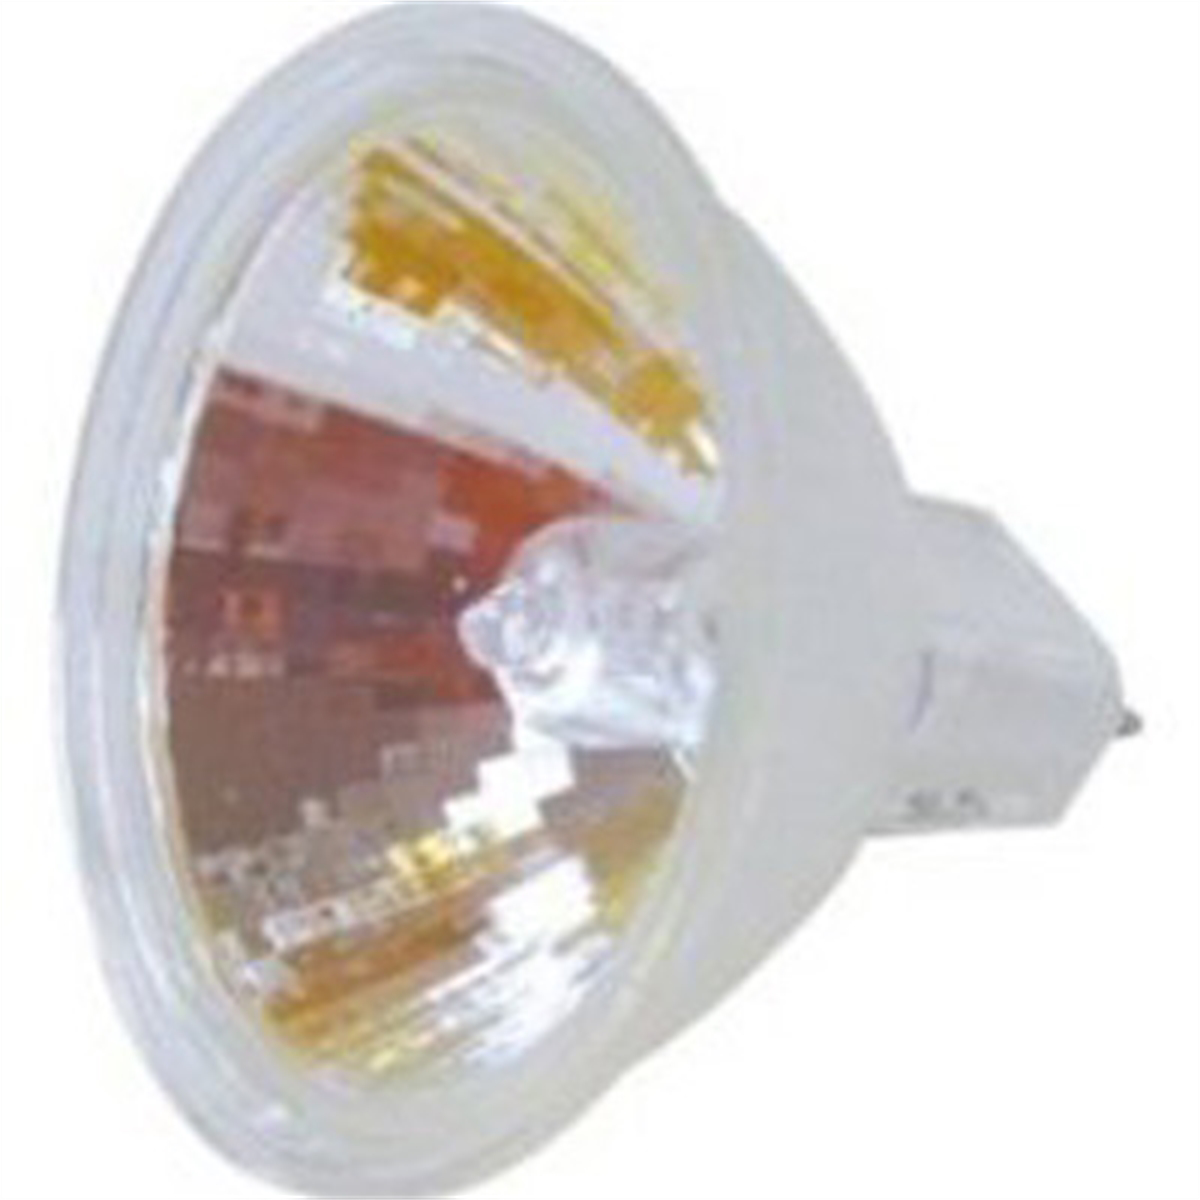 Microlite Replacement Bulb 50 Watt